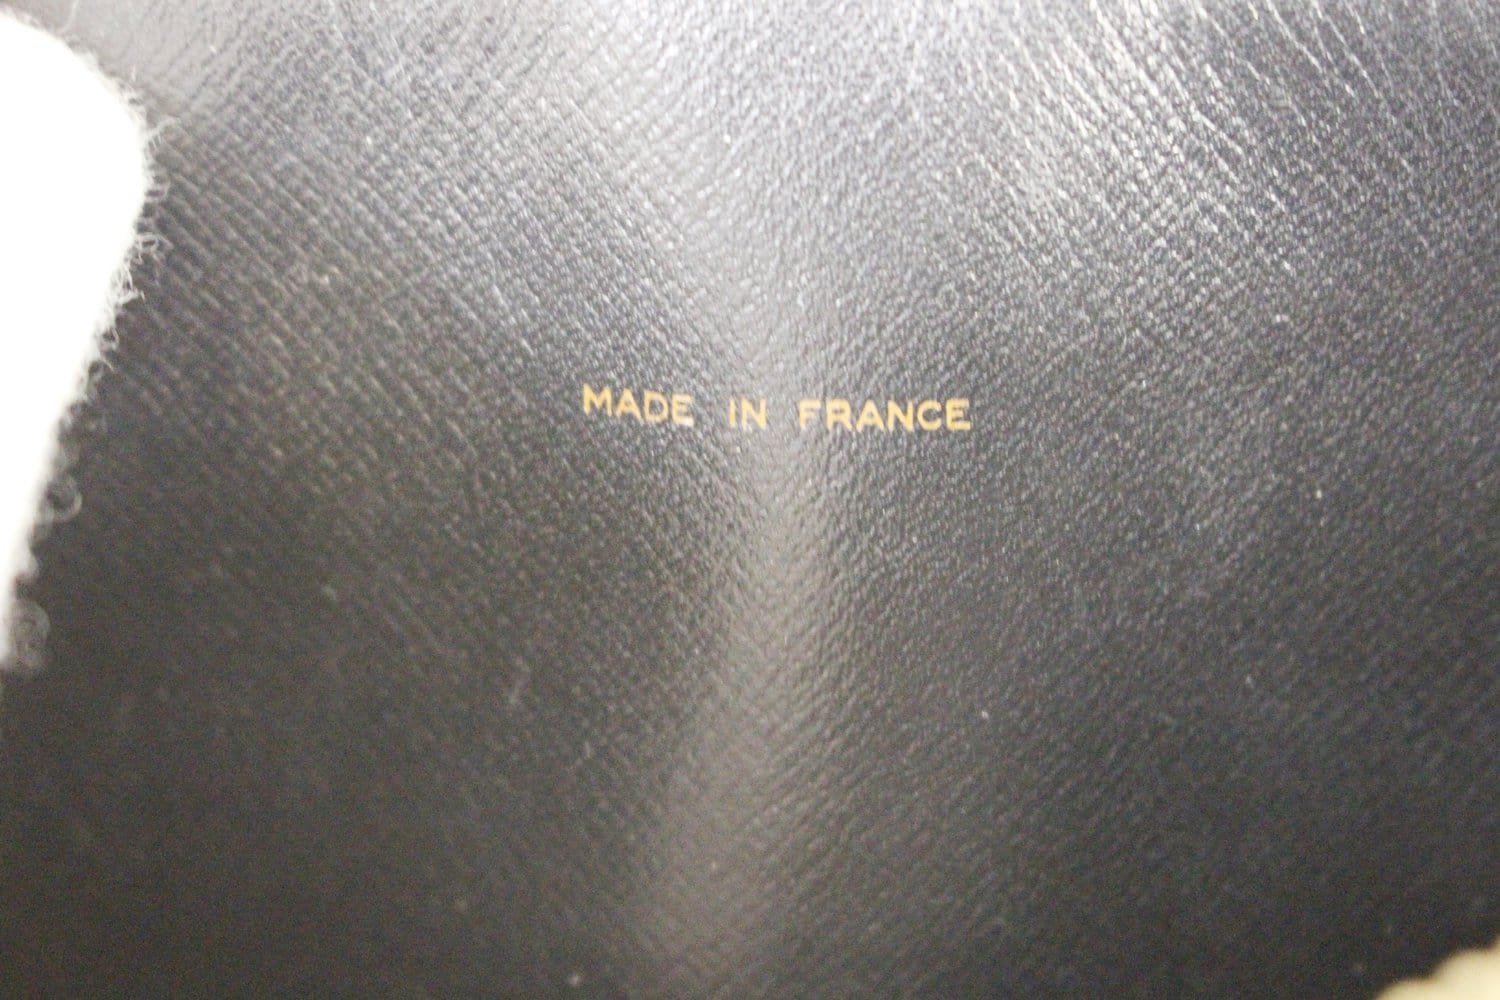 Louis Vuitton Jeune Fille MM epi - Good or Bag